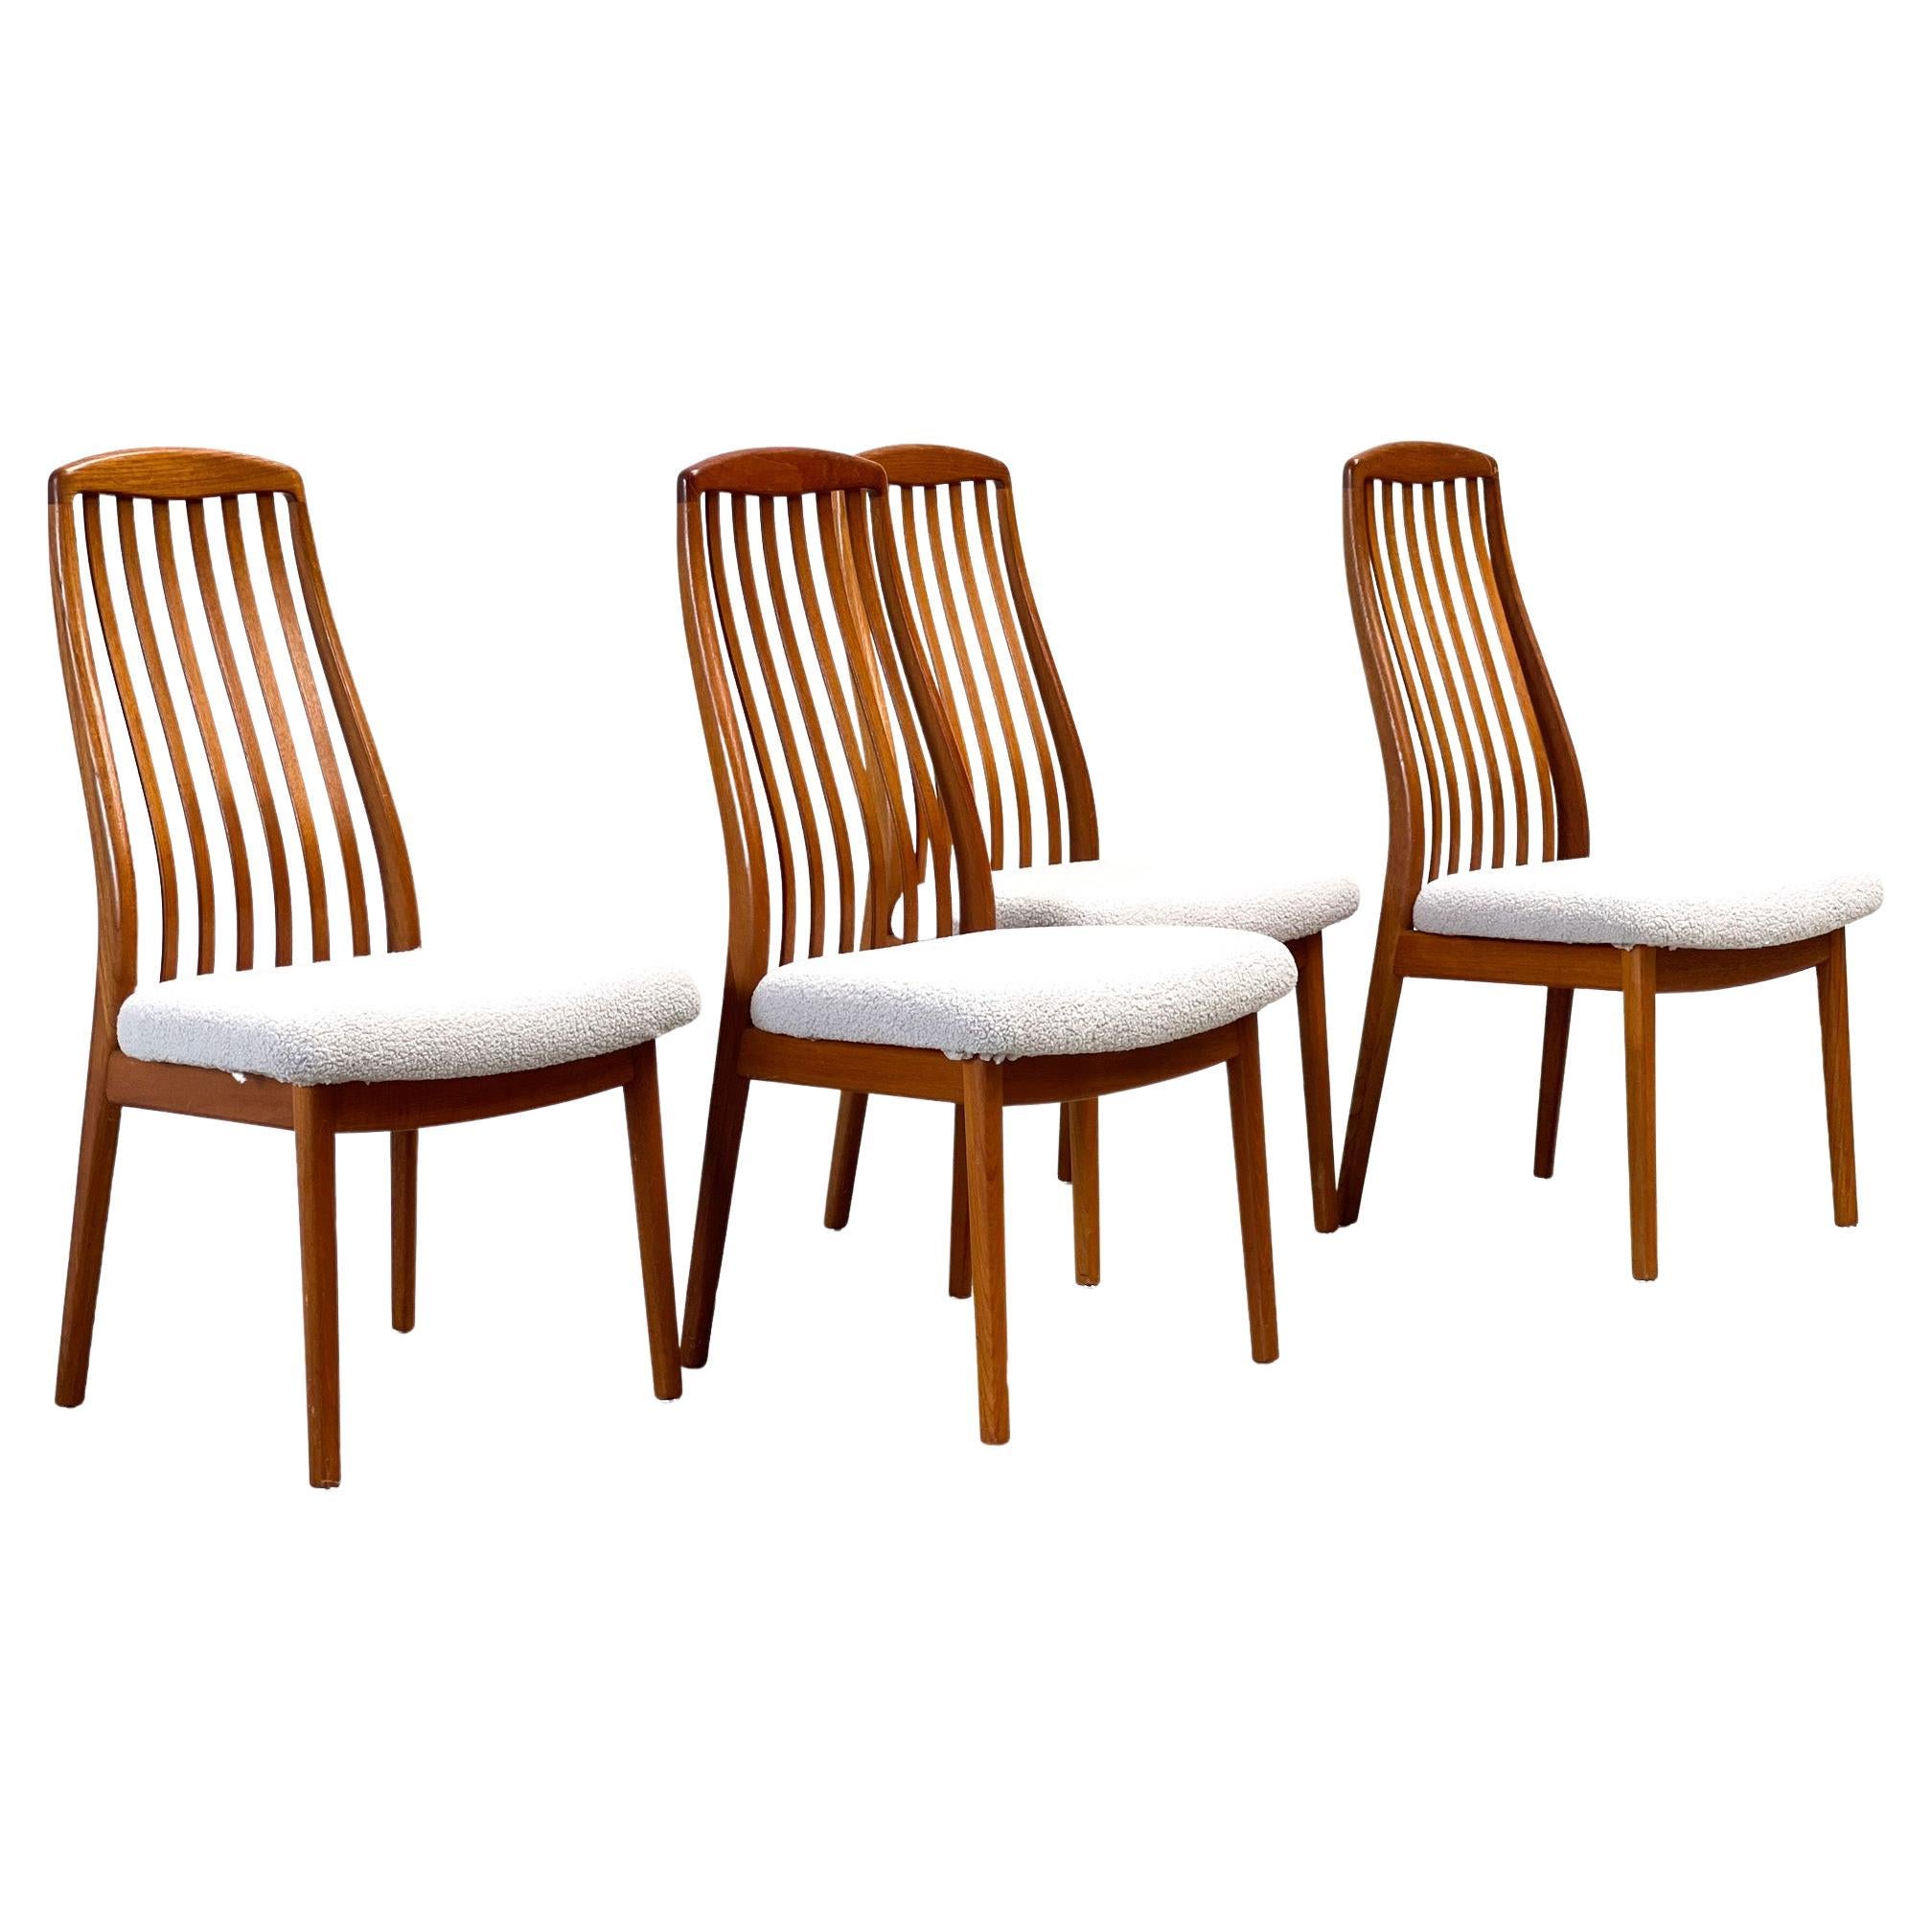 4 dining chairs by Preben Shou Denmark